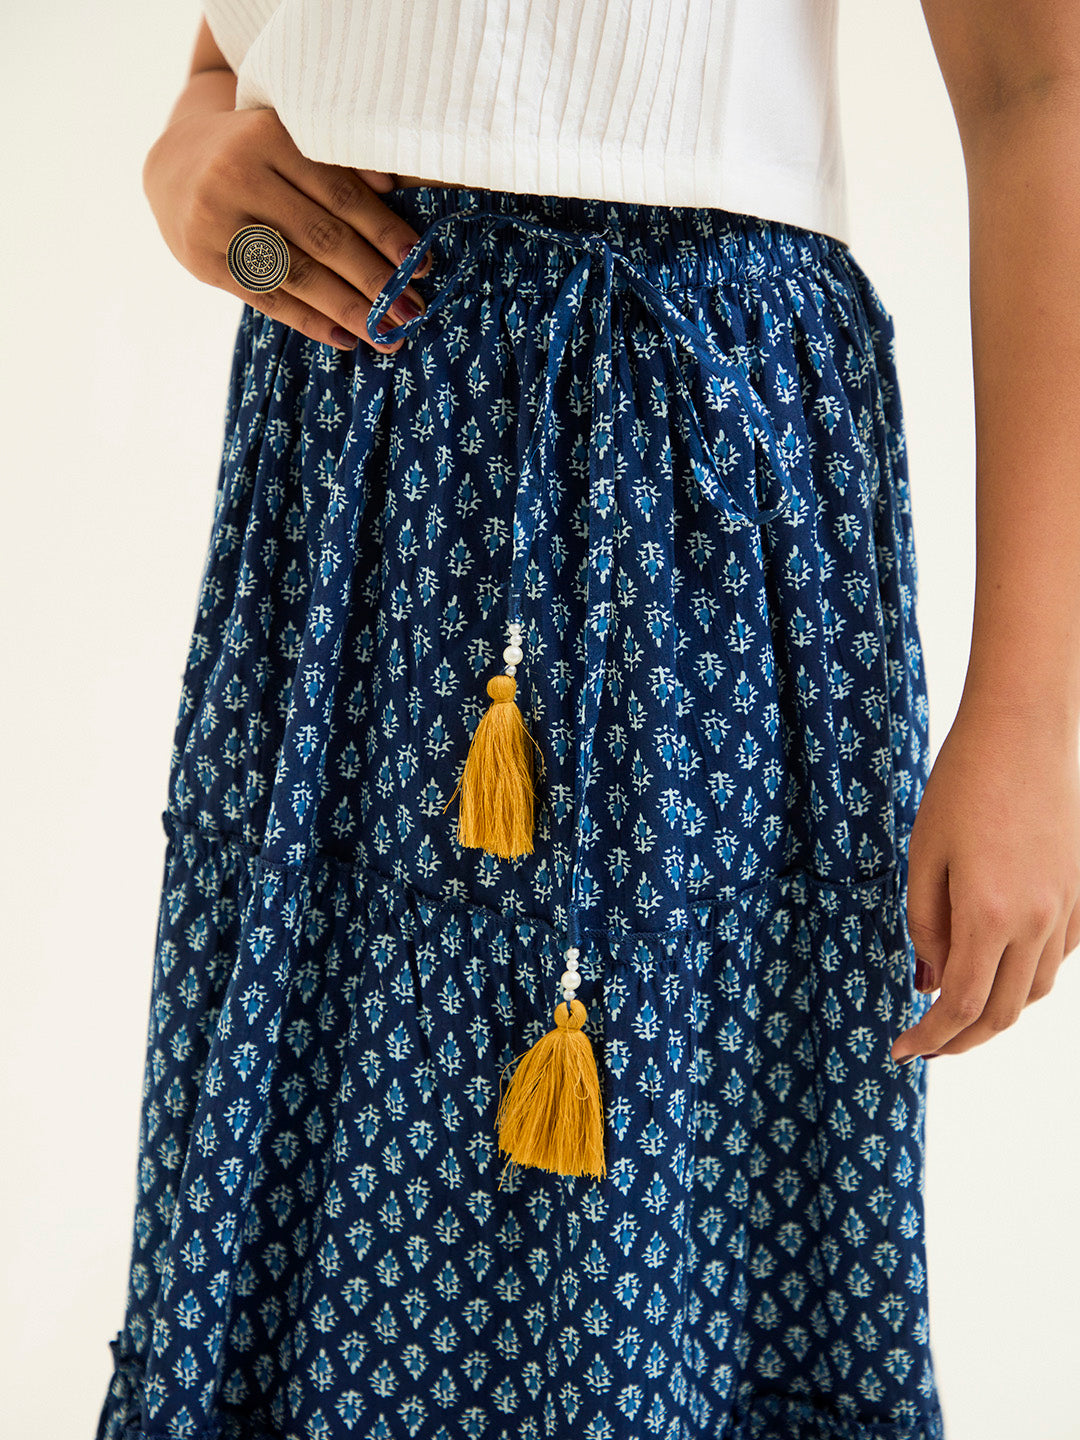 Indigo Blue Handblock Printed Cotton Skirt